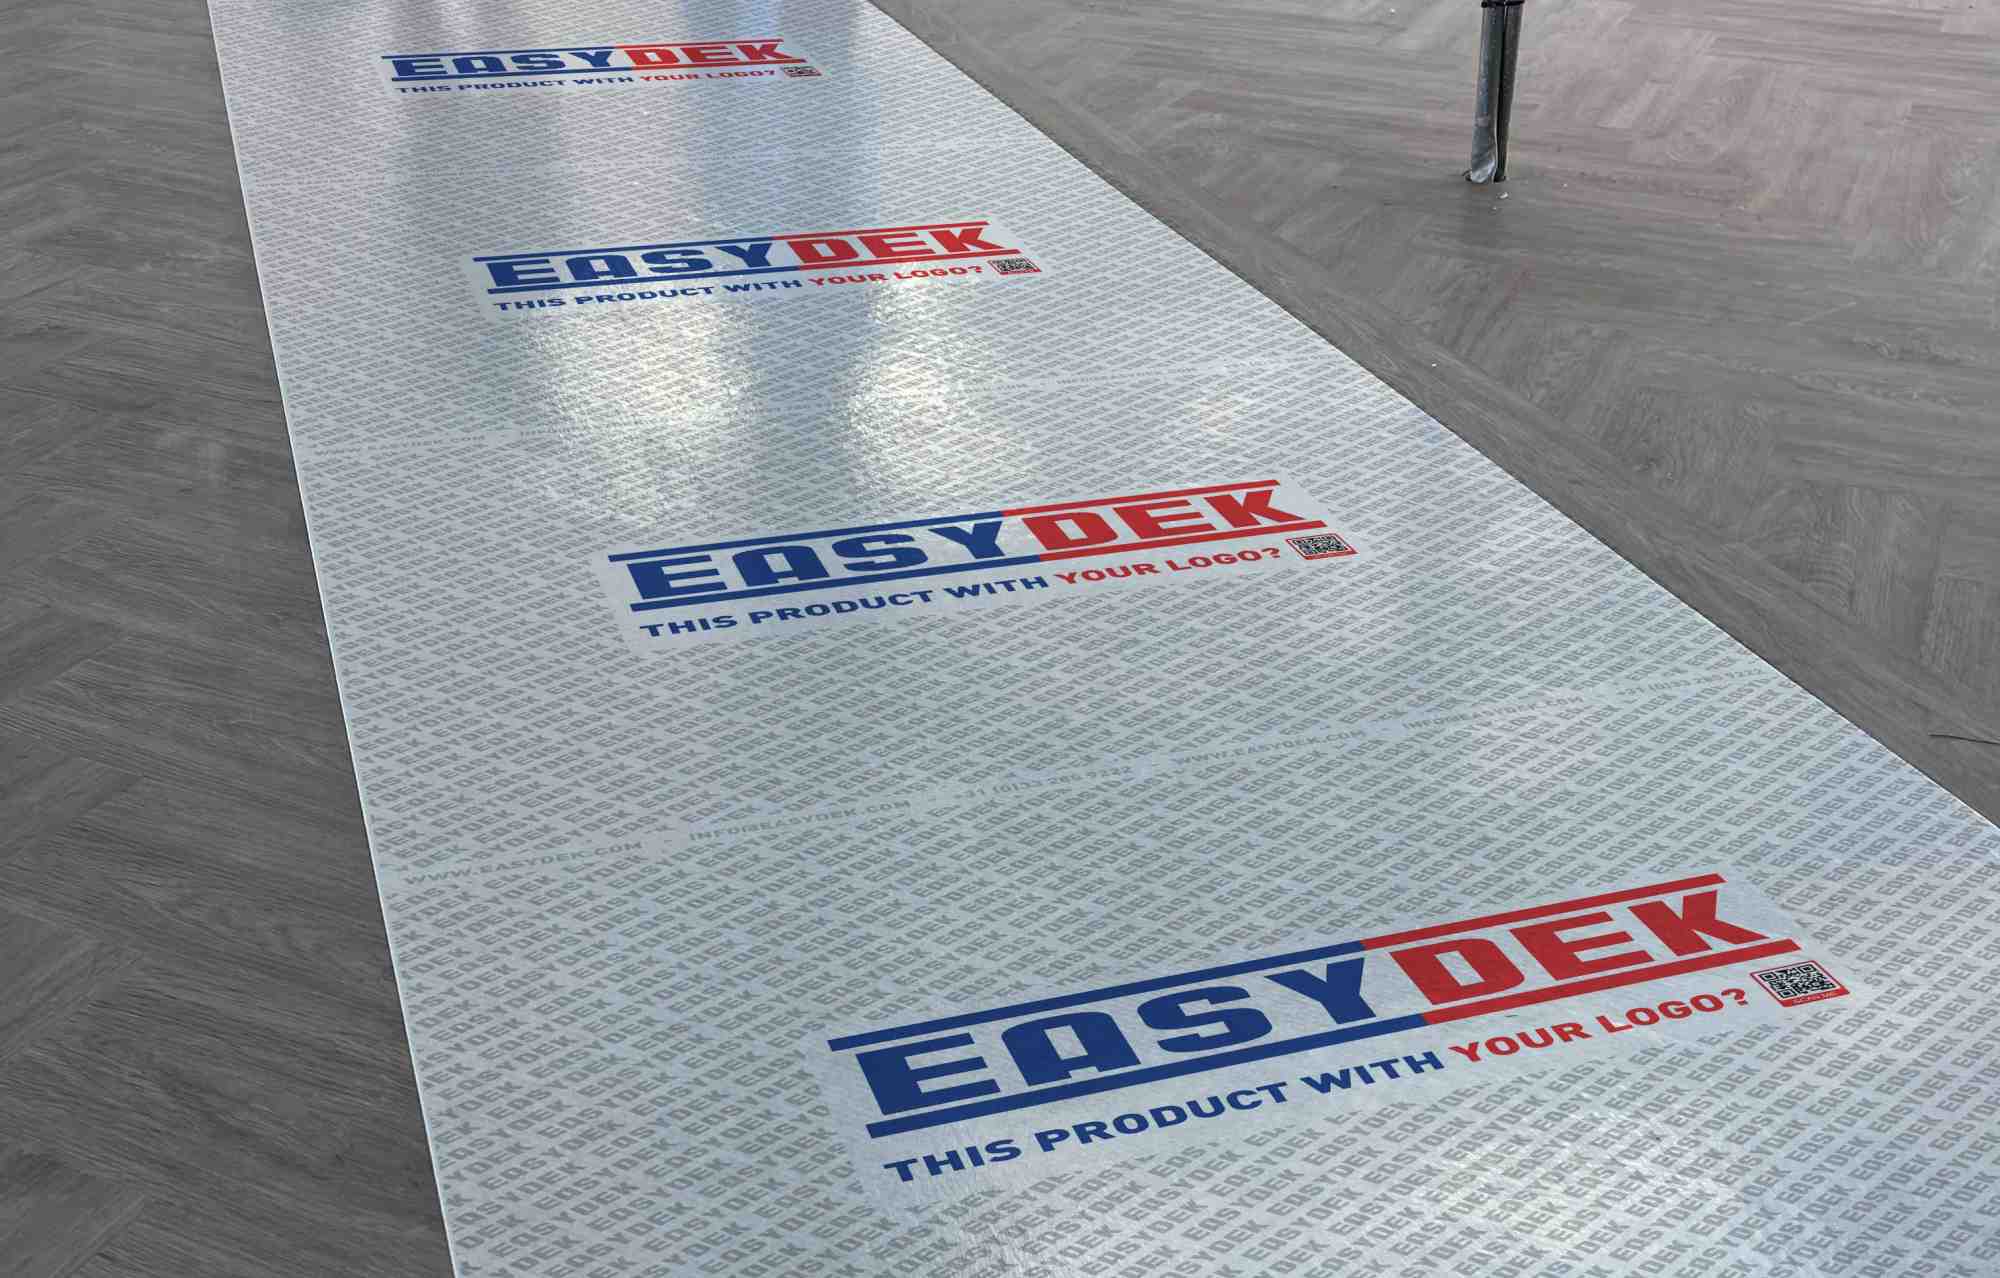 Easydek Printing services